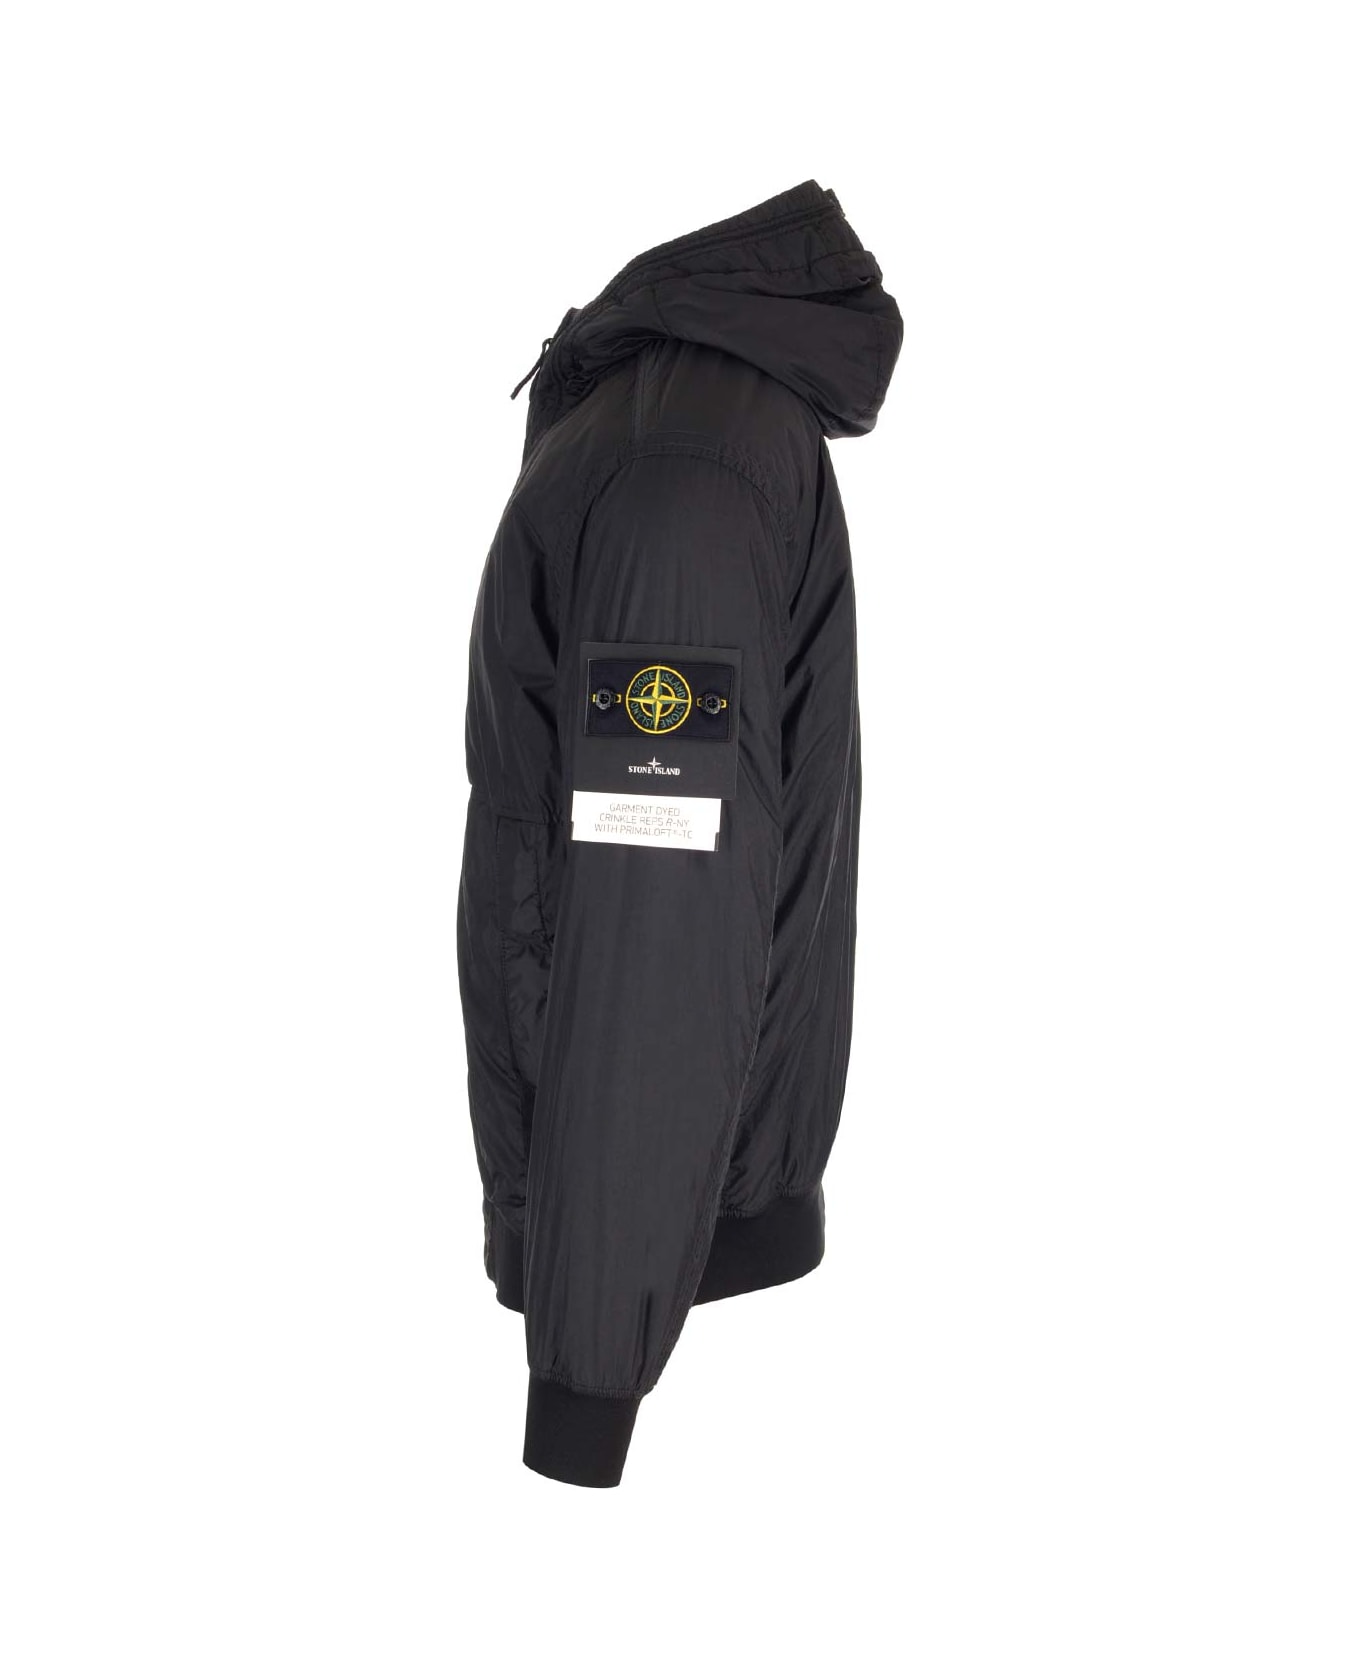 Stone Island Waterproof Jacket - black